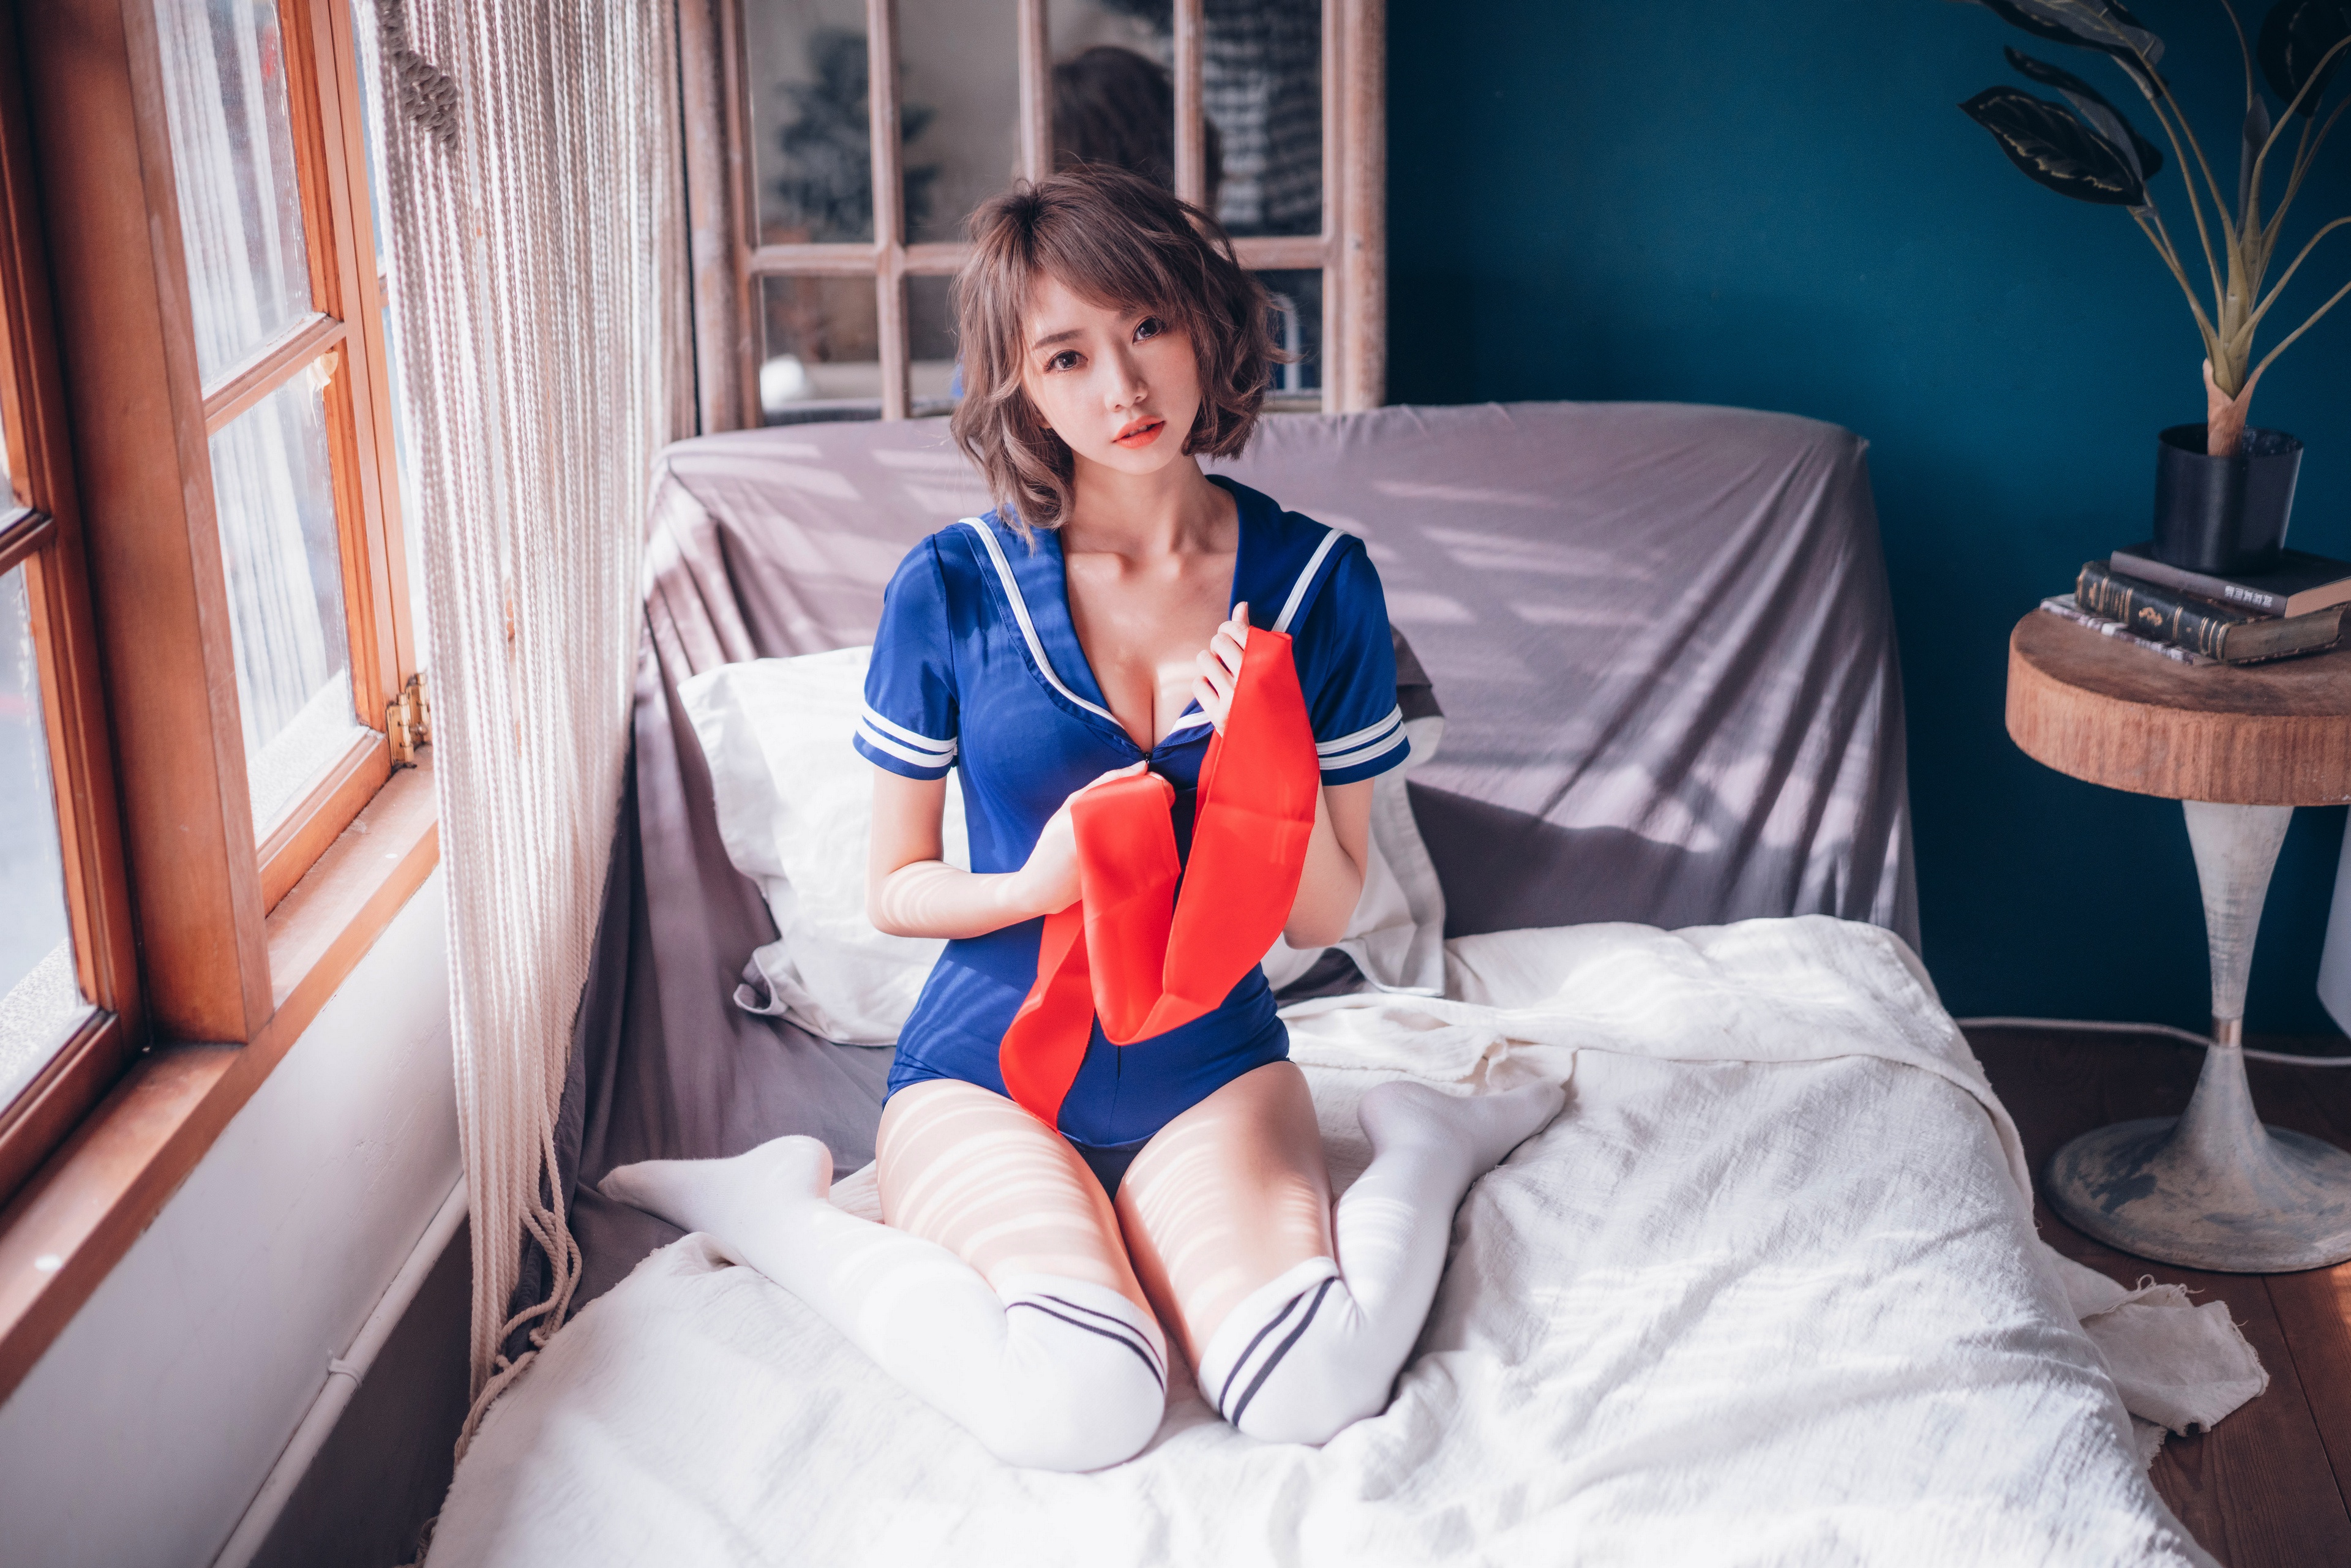 Asian Model Women Brunette Short Hair Knee High Socks Sitting Bed Pillow Curtain Window Sailor Unifo 3840x2561